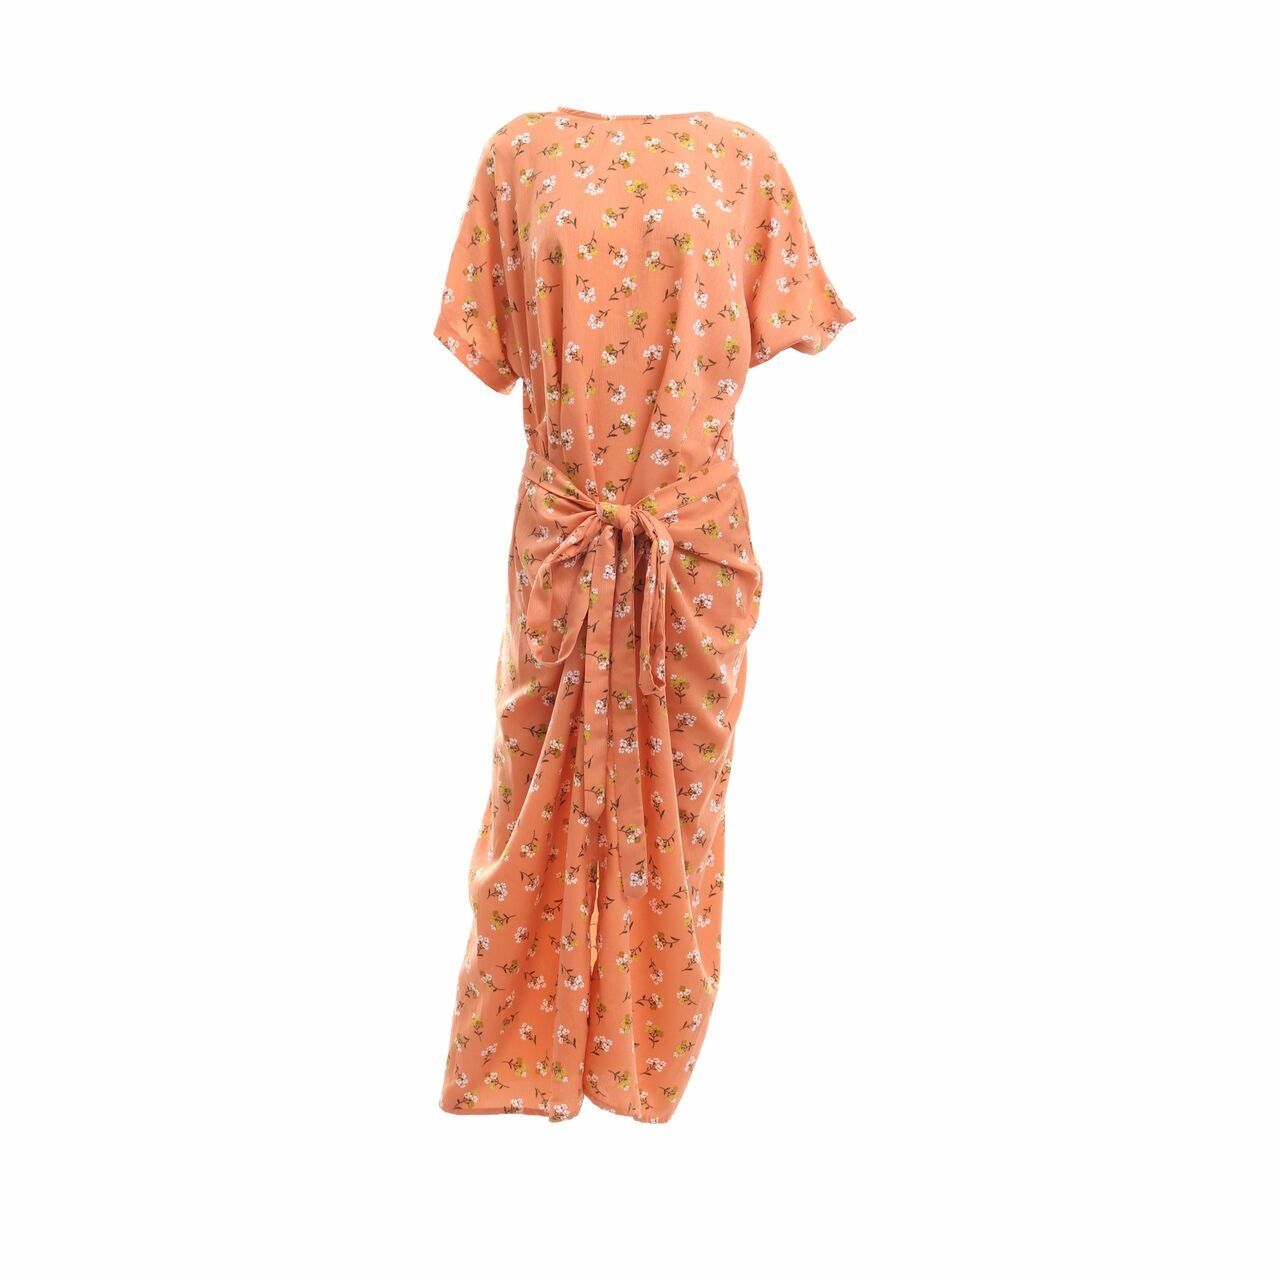 KALM Coral Floral Long Dress